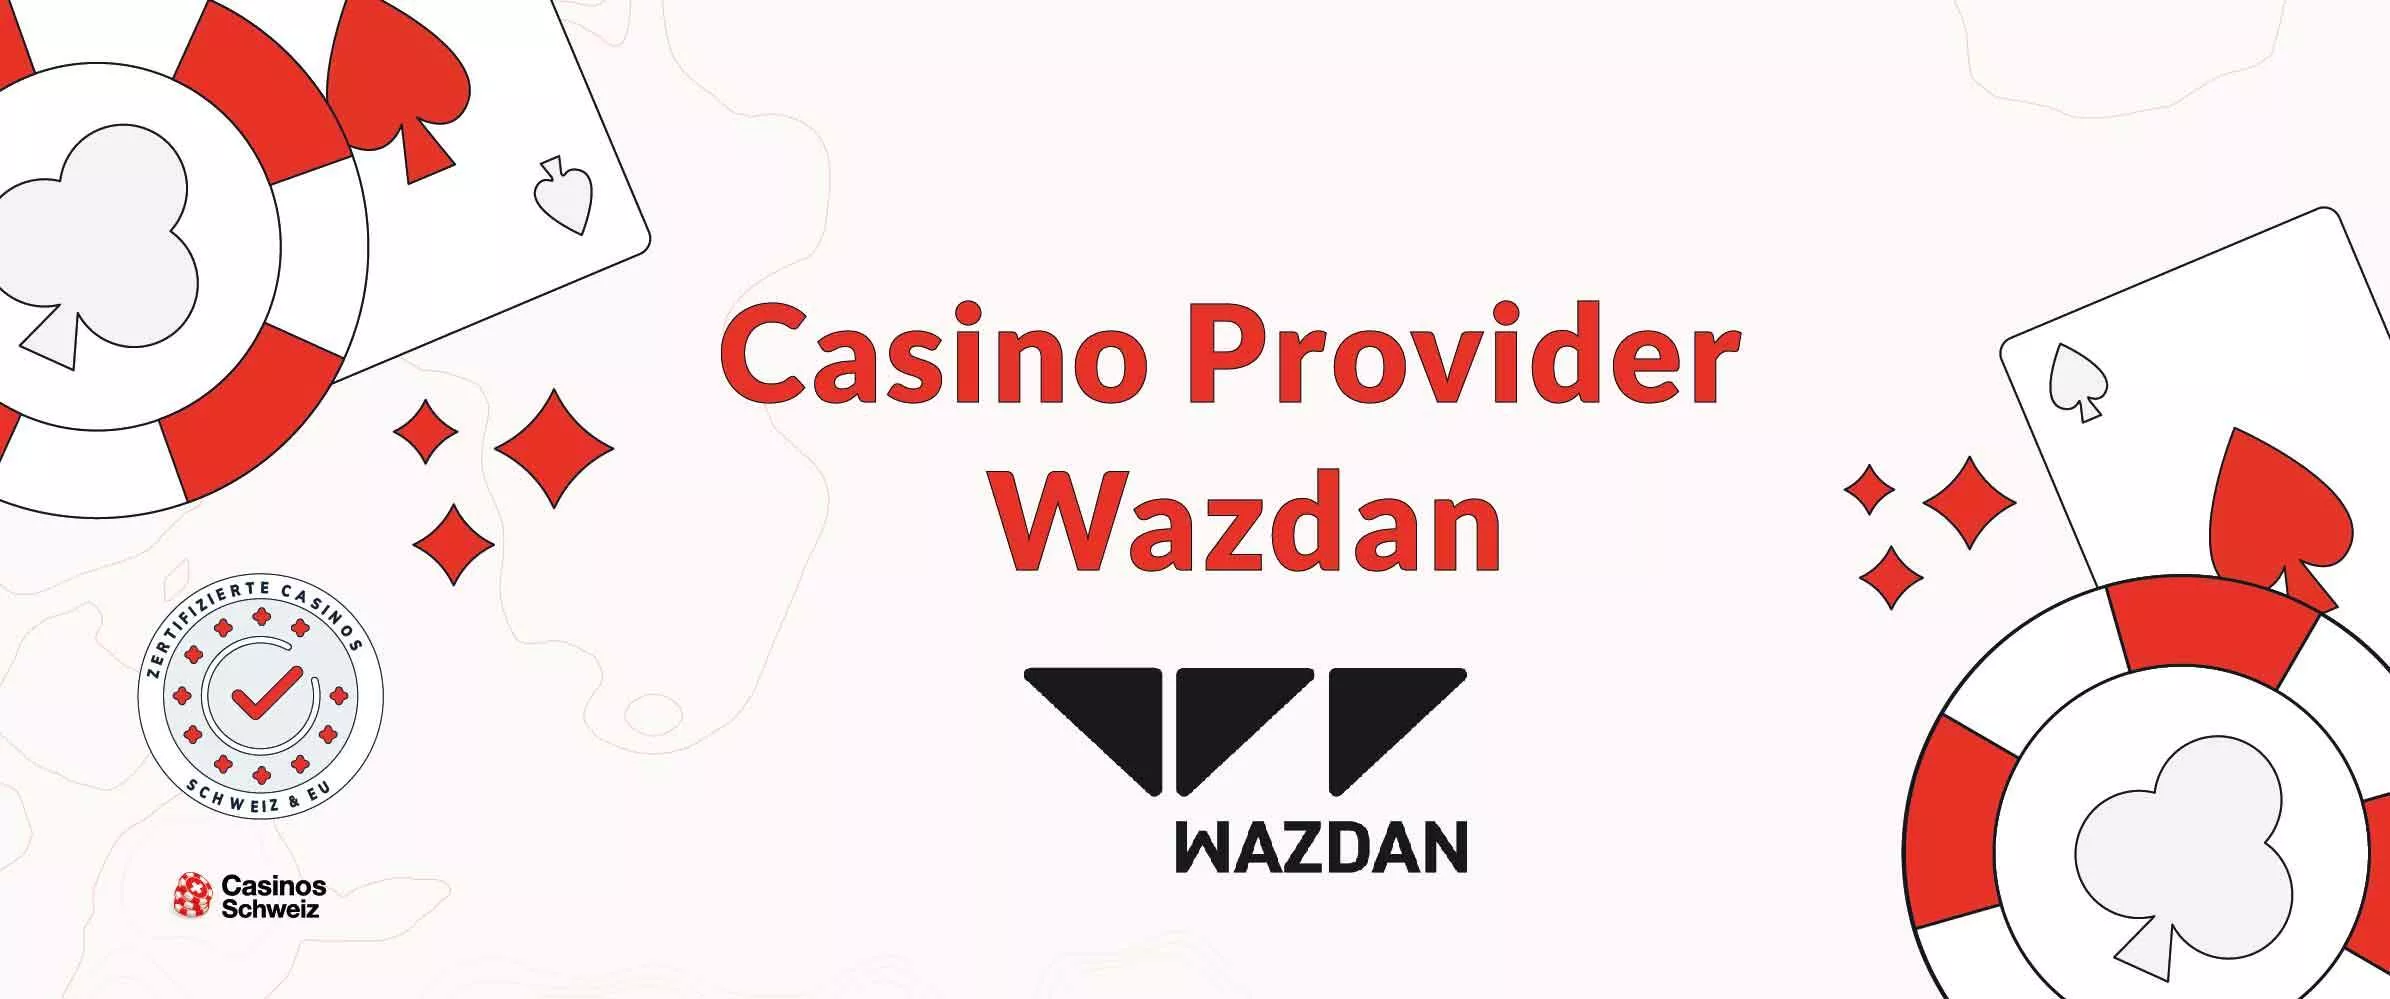 Casino Provider Wazdan